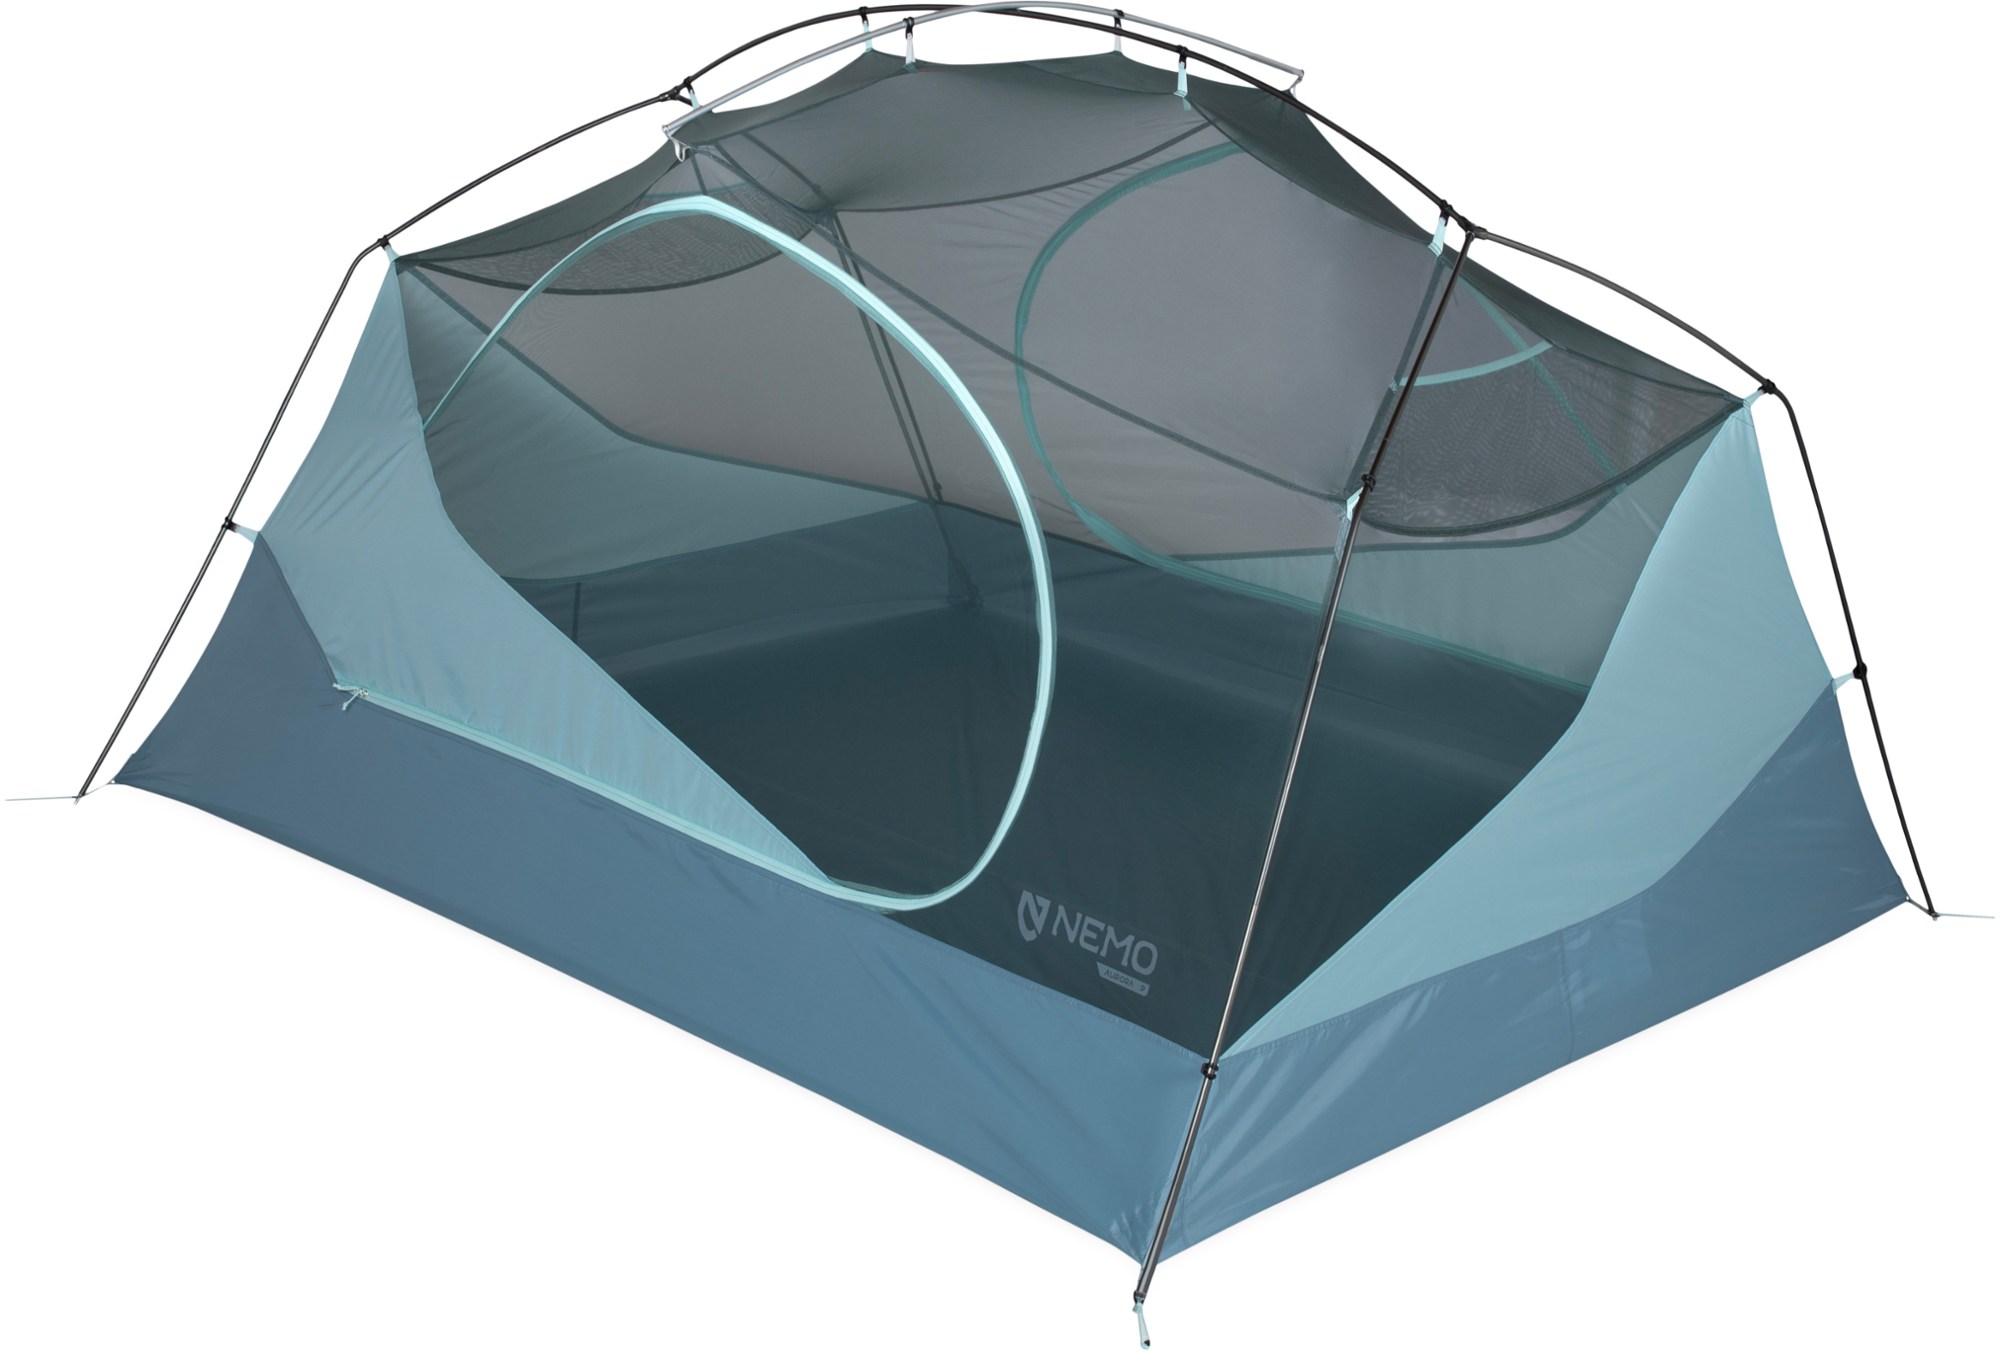 Nemo Aurora 2P budget backpacking tent